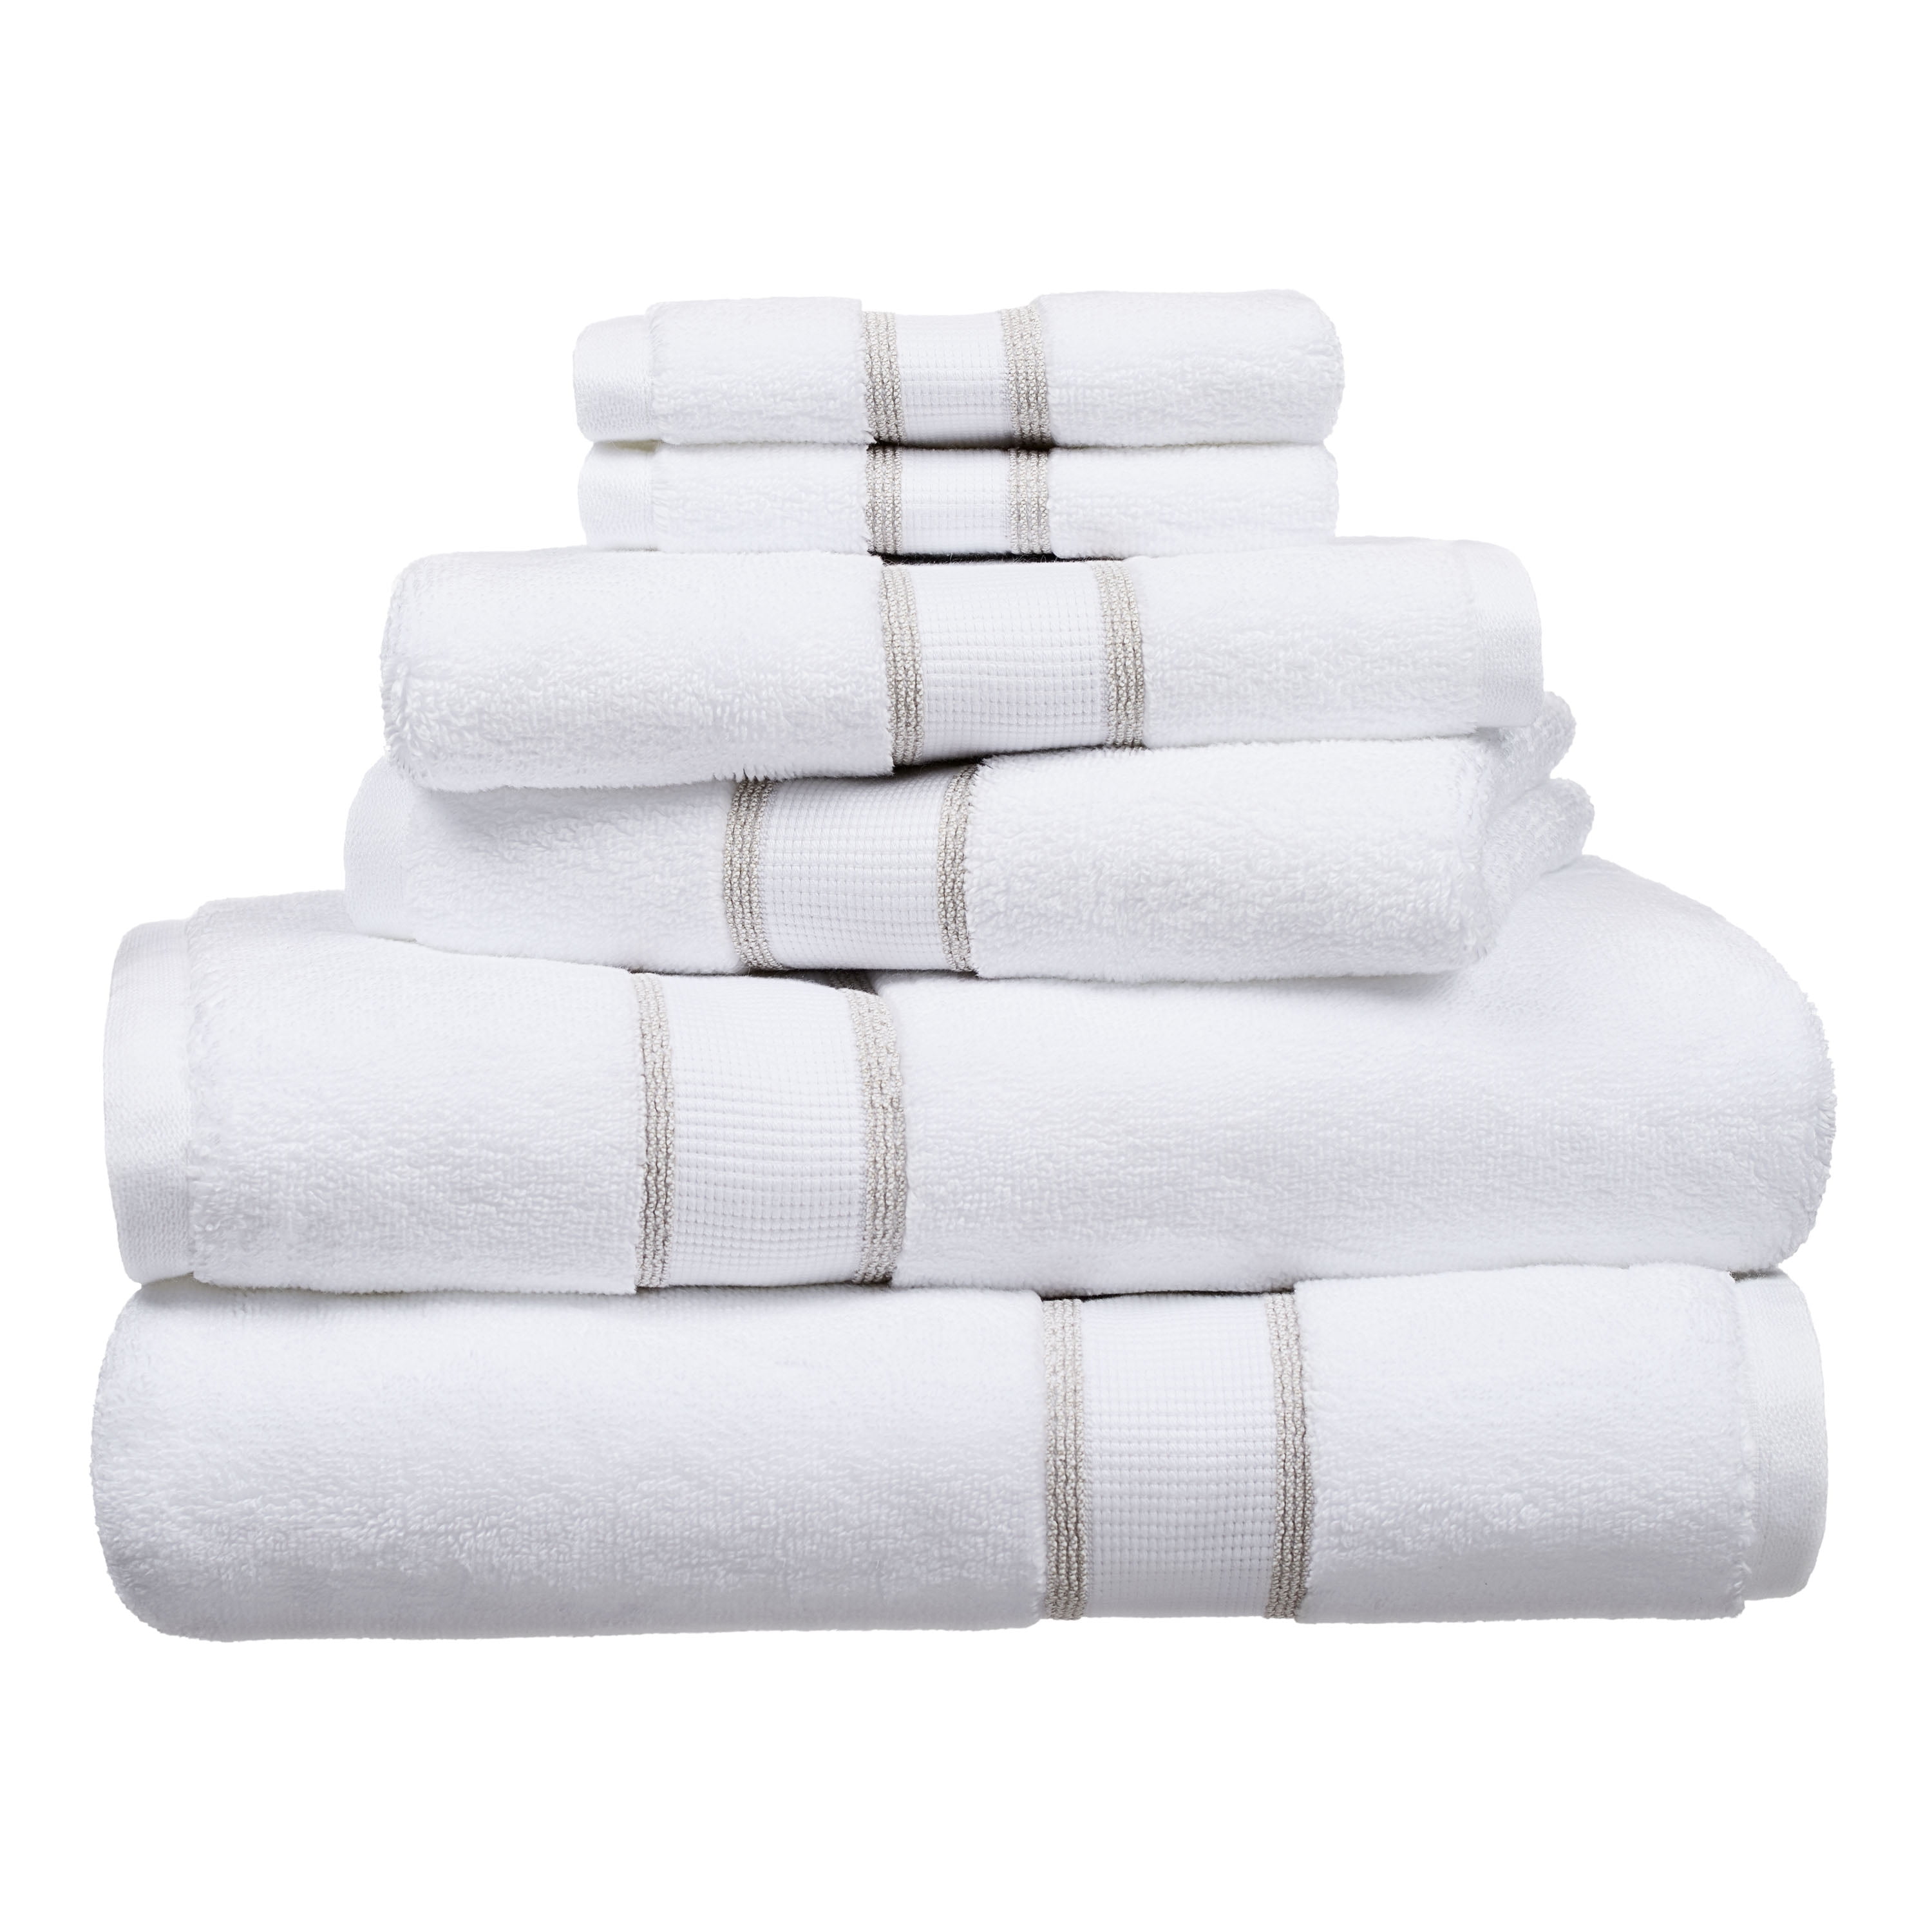 COZYART Green Cotton Hotel Large Bath Towels Bulk for Bathroom, Thick  Bathroom Towels Set of 6 with 2 Bath Towels, 2 Hand Towels, 2 Washcloths,  650